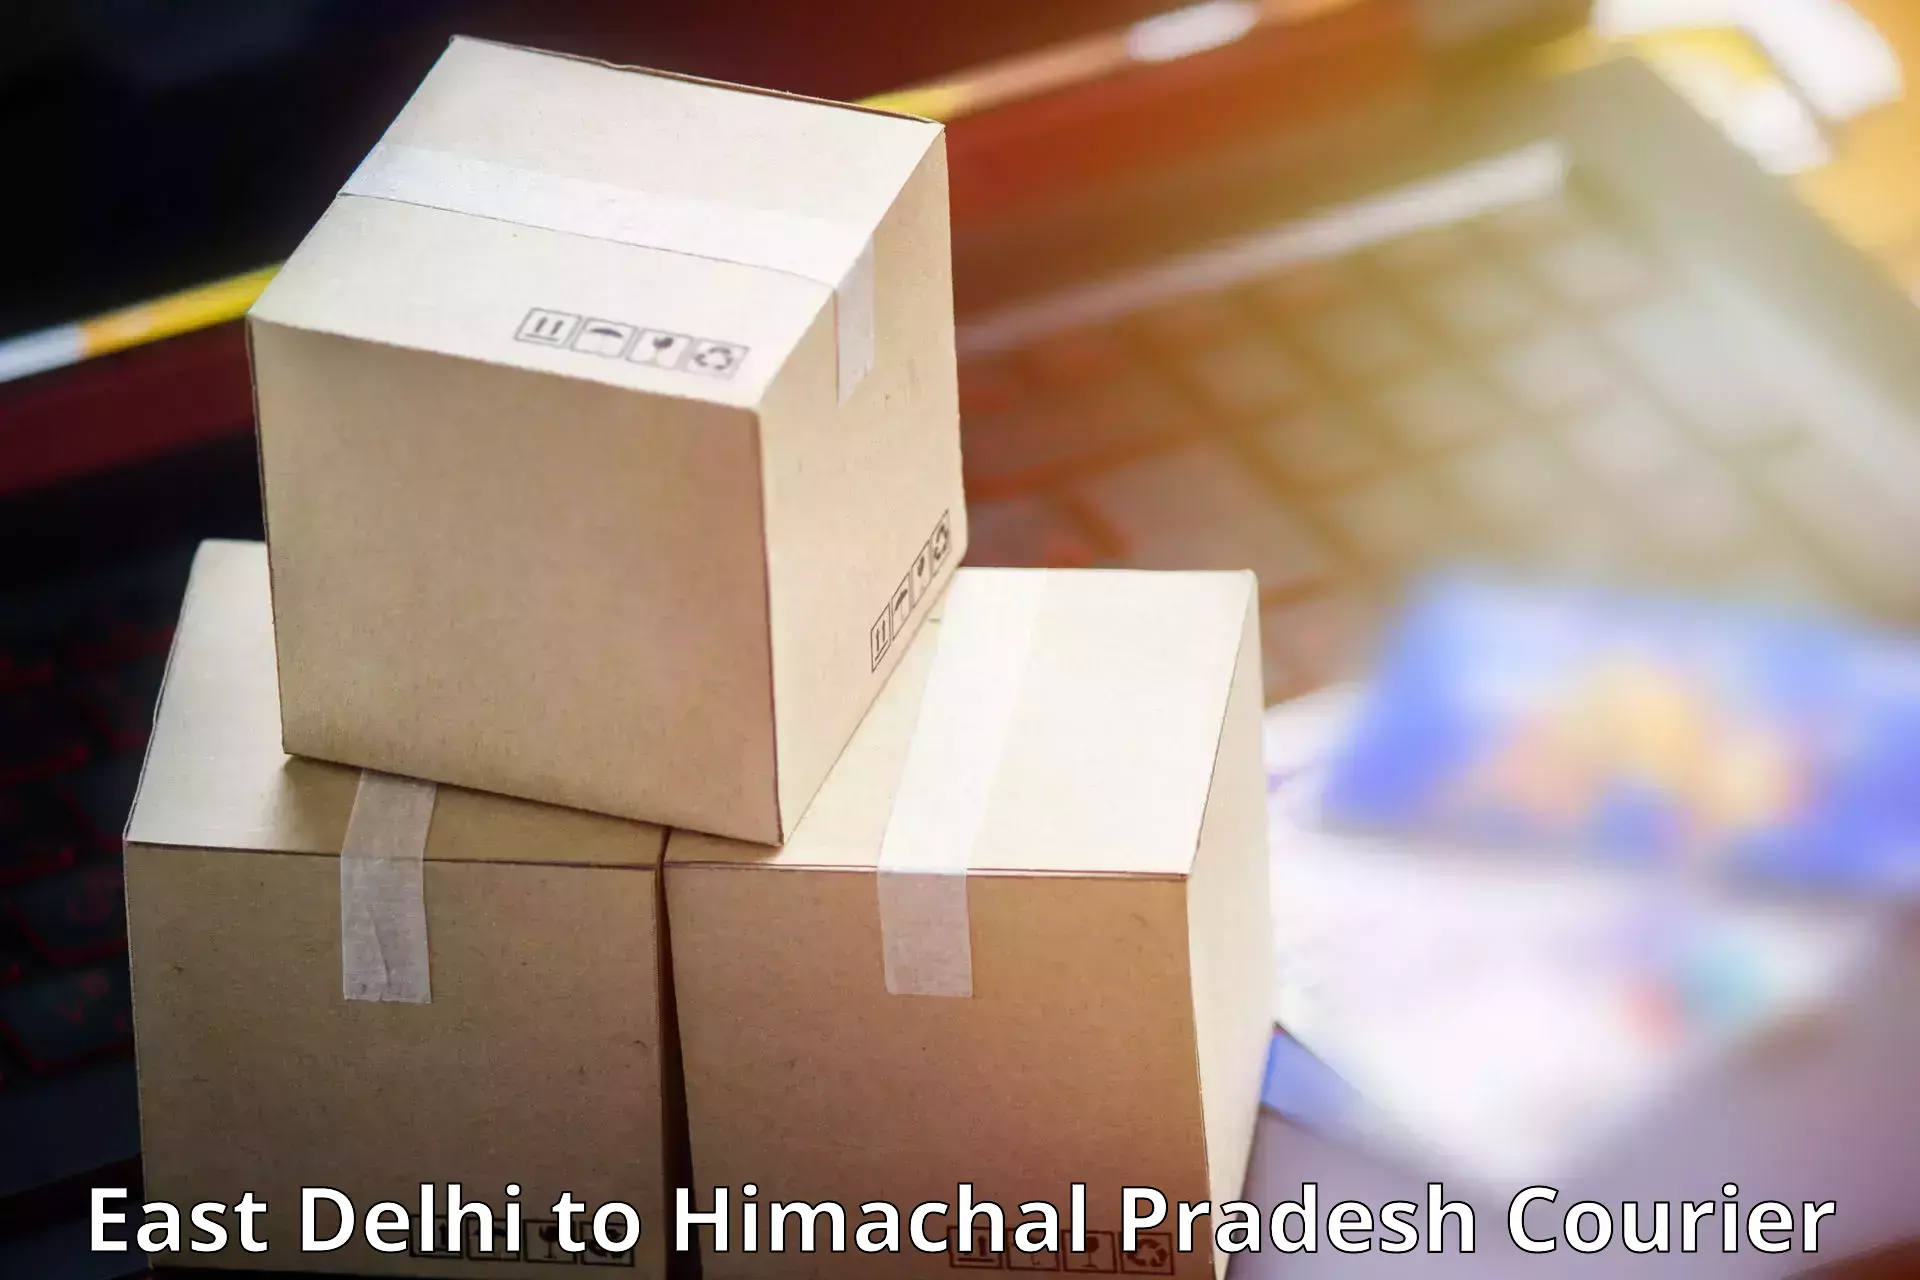 Courier service booking East Delhi to Sundar Nagar